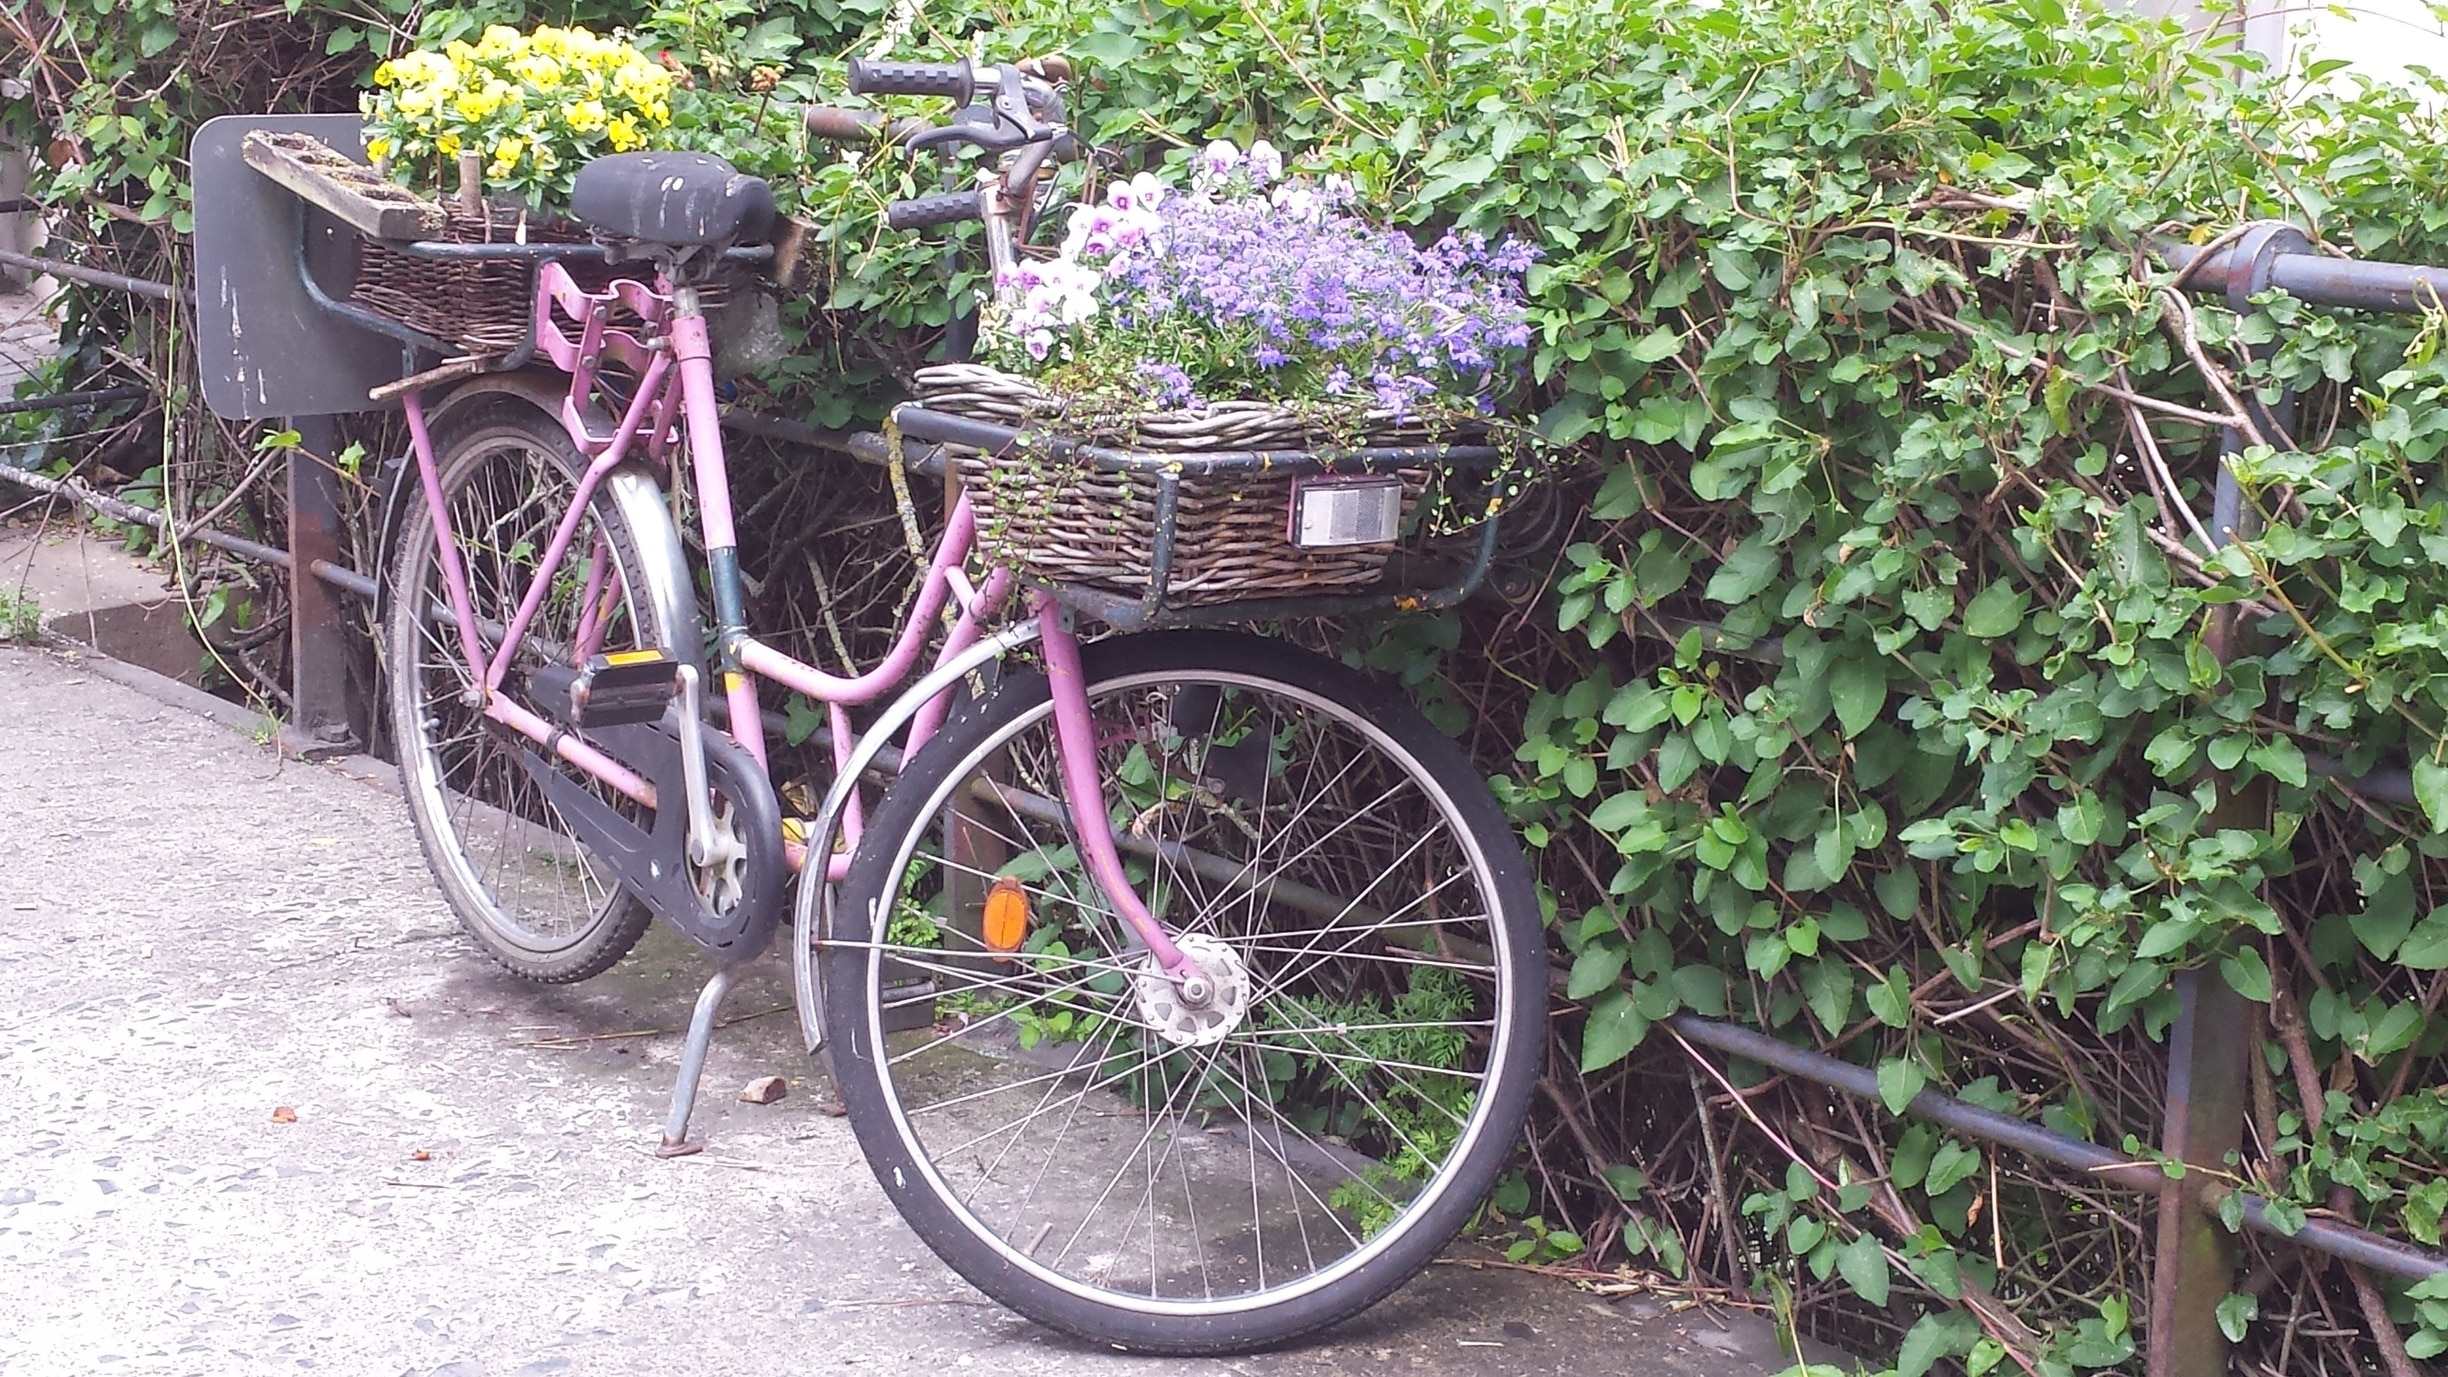 Flower bike find near the Danube River. 